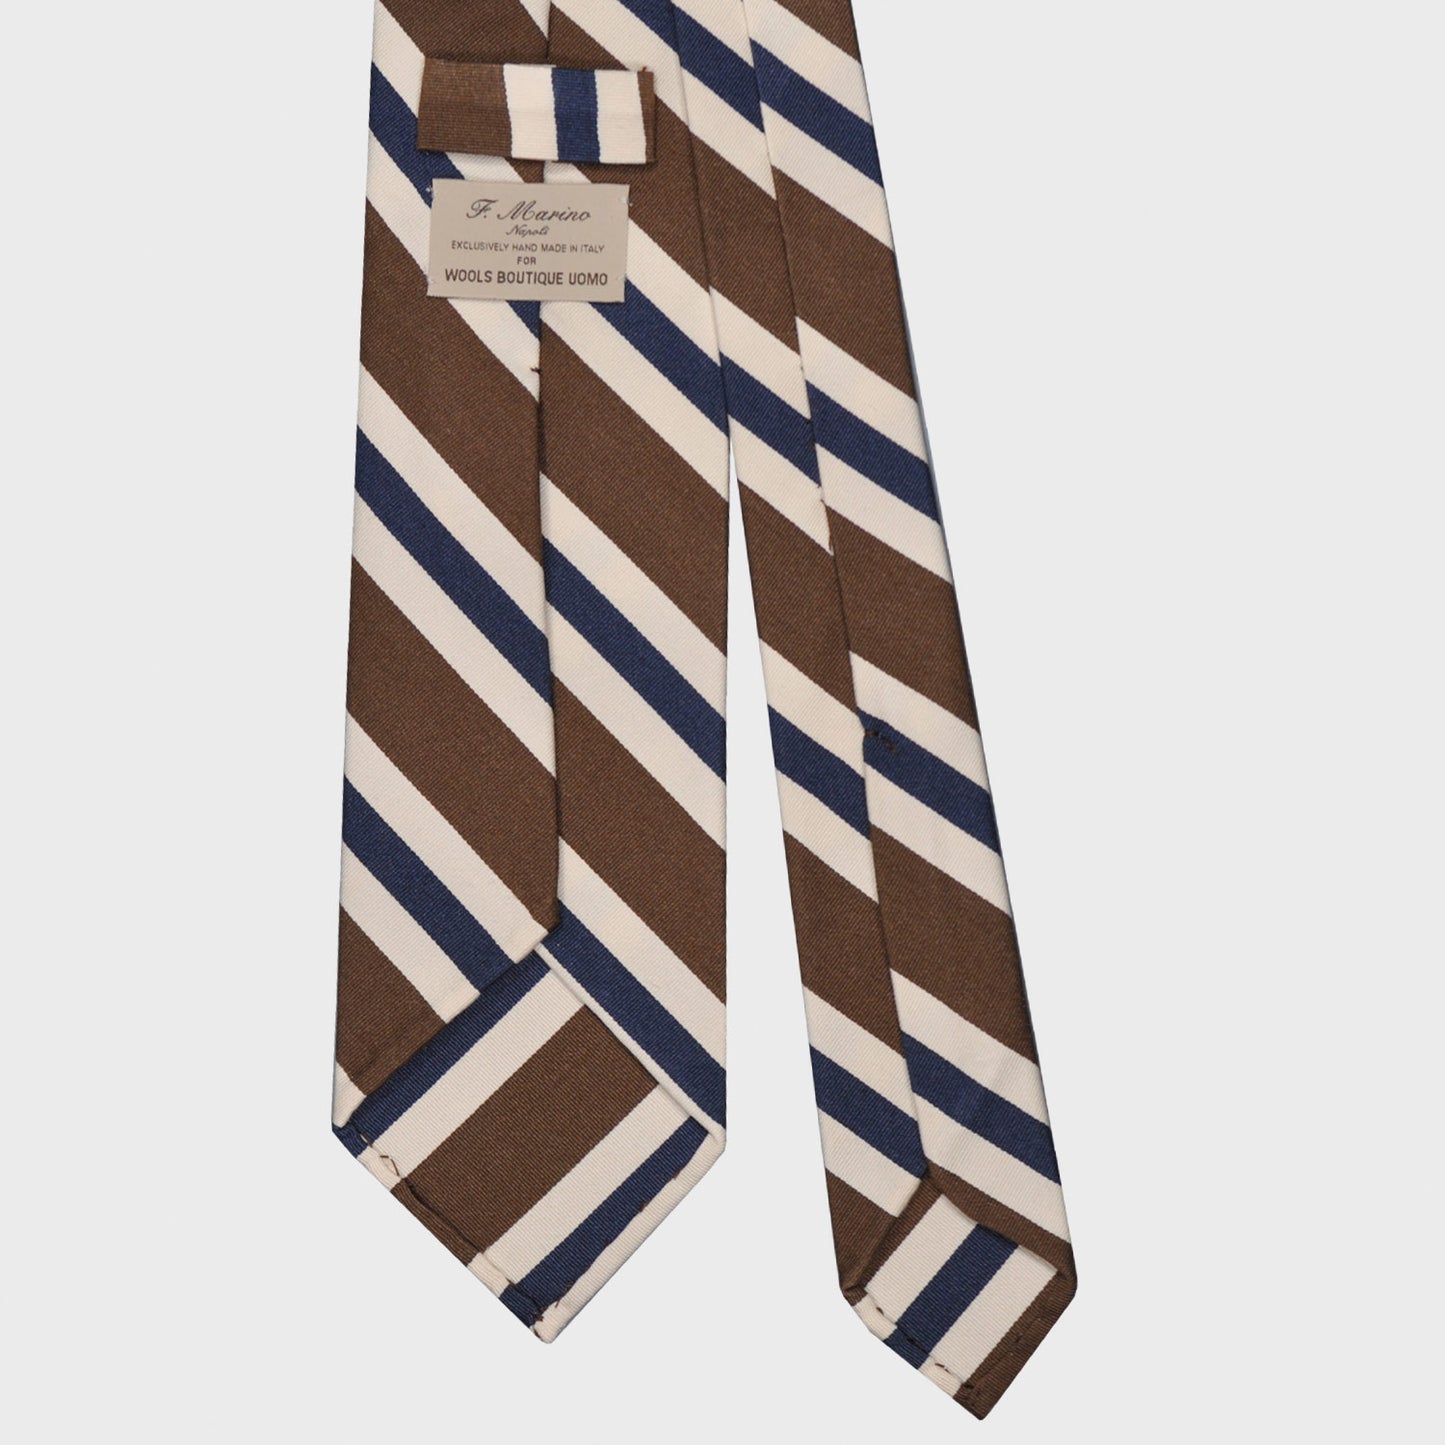 F.Marino Silk Cotton Tie 3 Folds Regimental Coffee-Wools Boutique Uomo